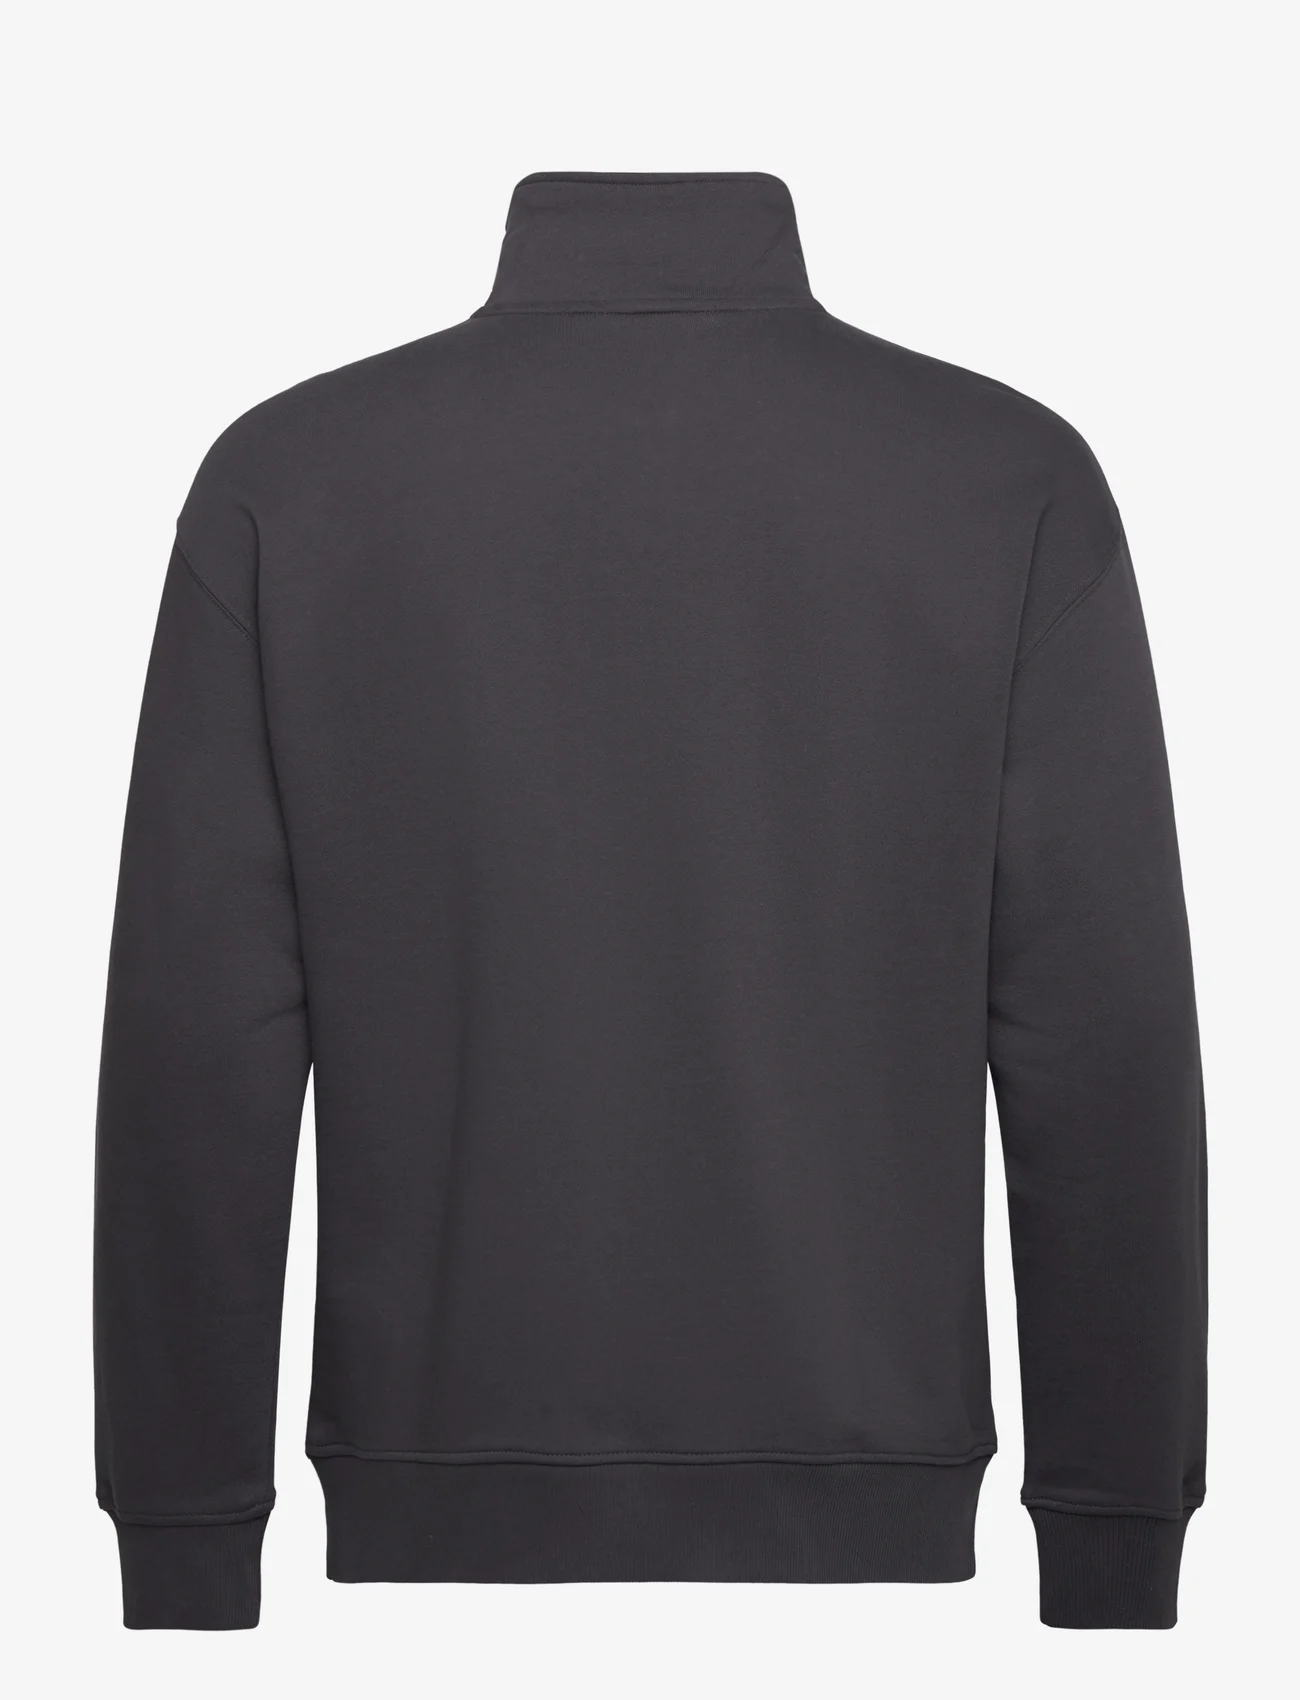 Lee Jeans - HALF ZIP SWS - sweatshirts - washed black - 1